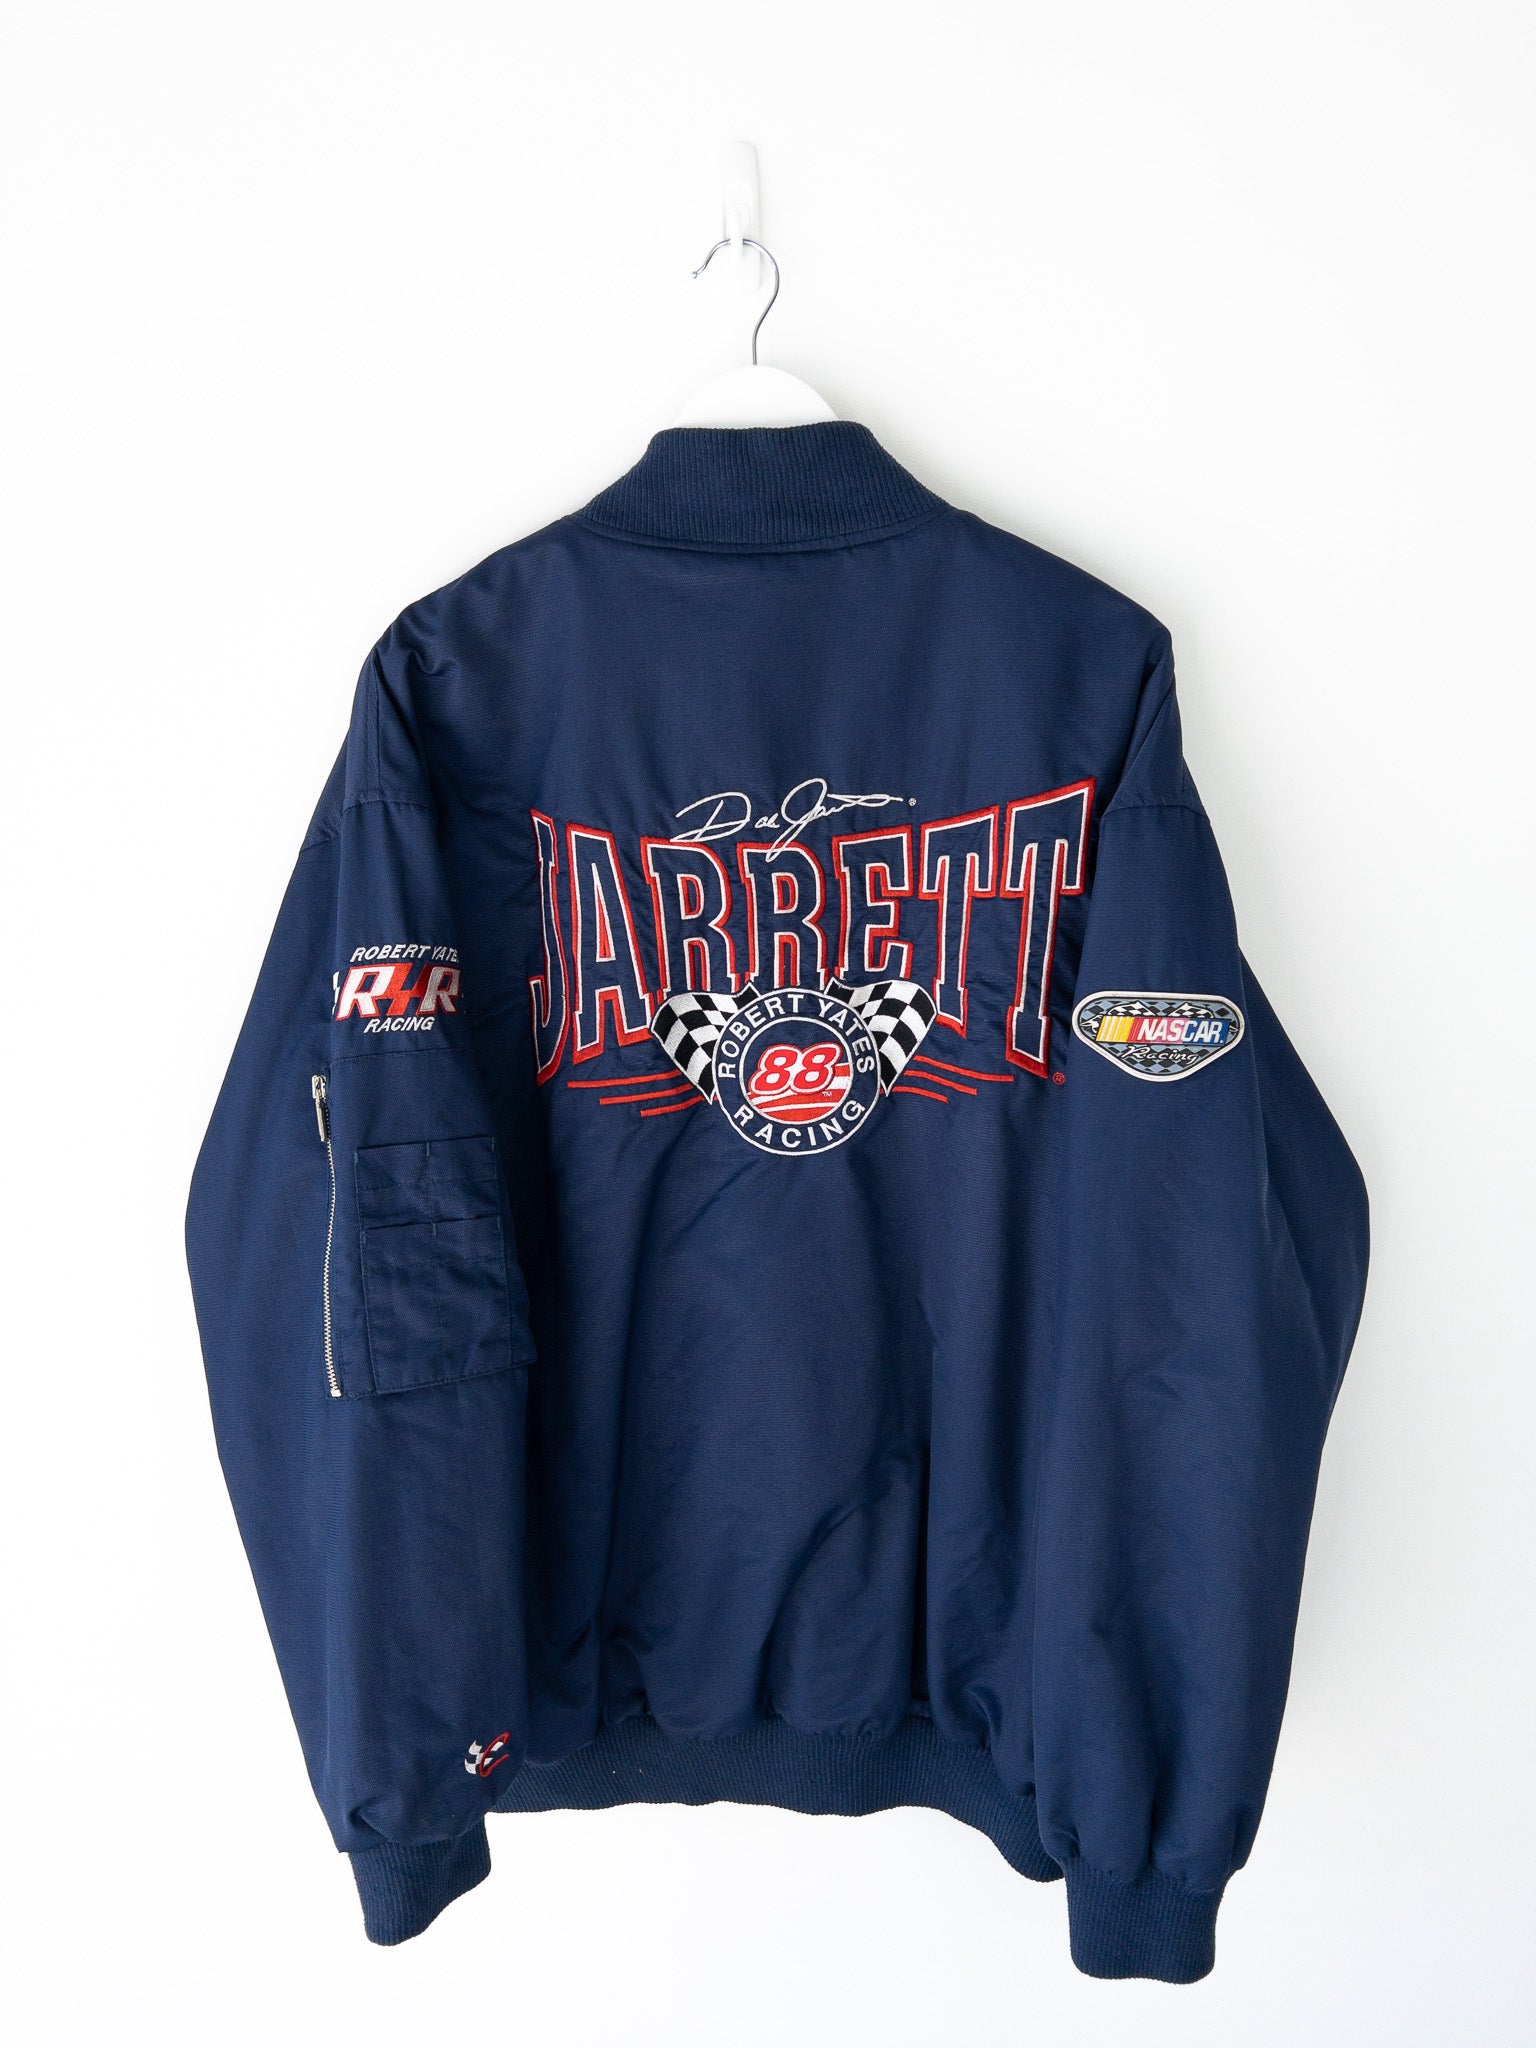 Vintage Dale Jarrett Racing Jacket (XL)